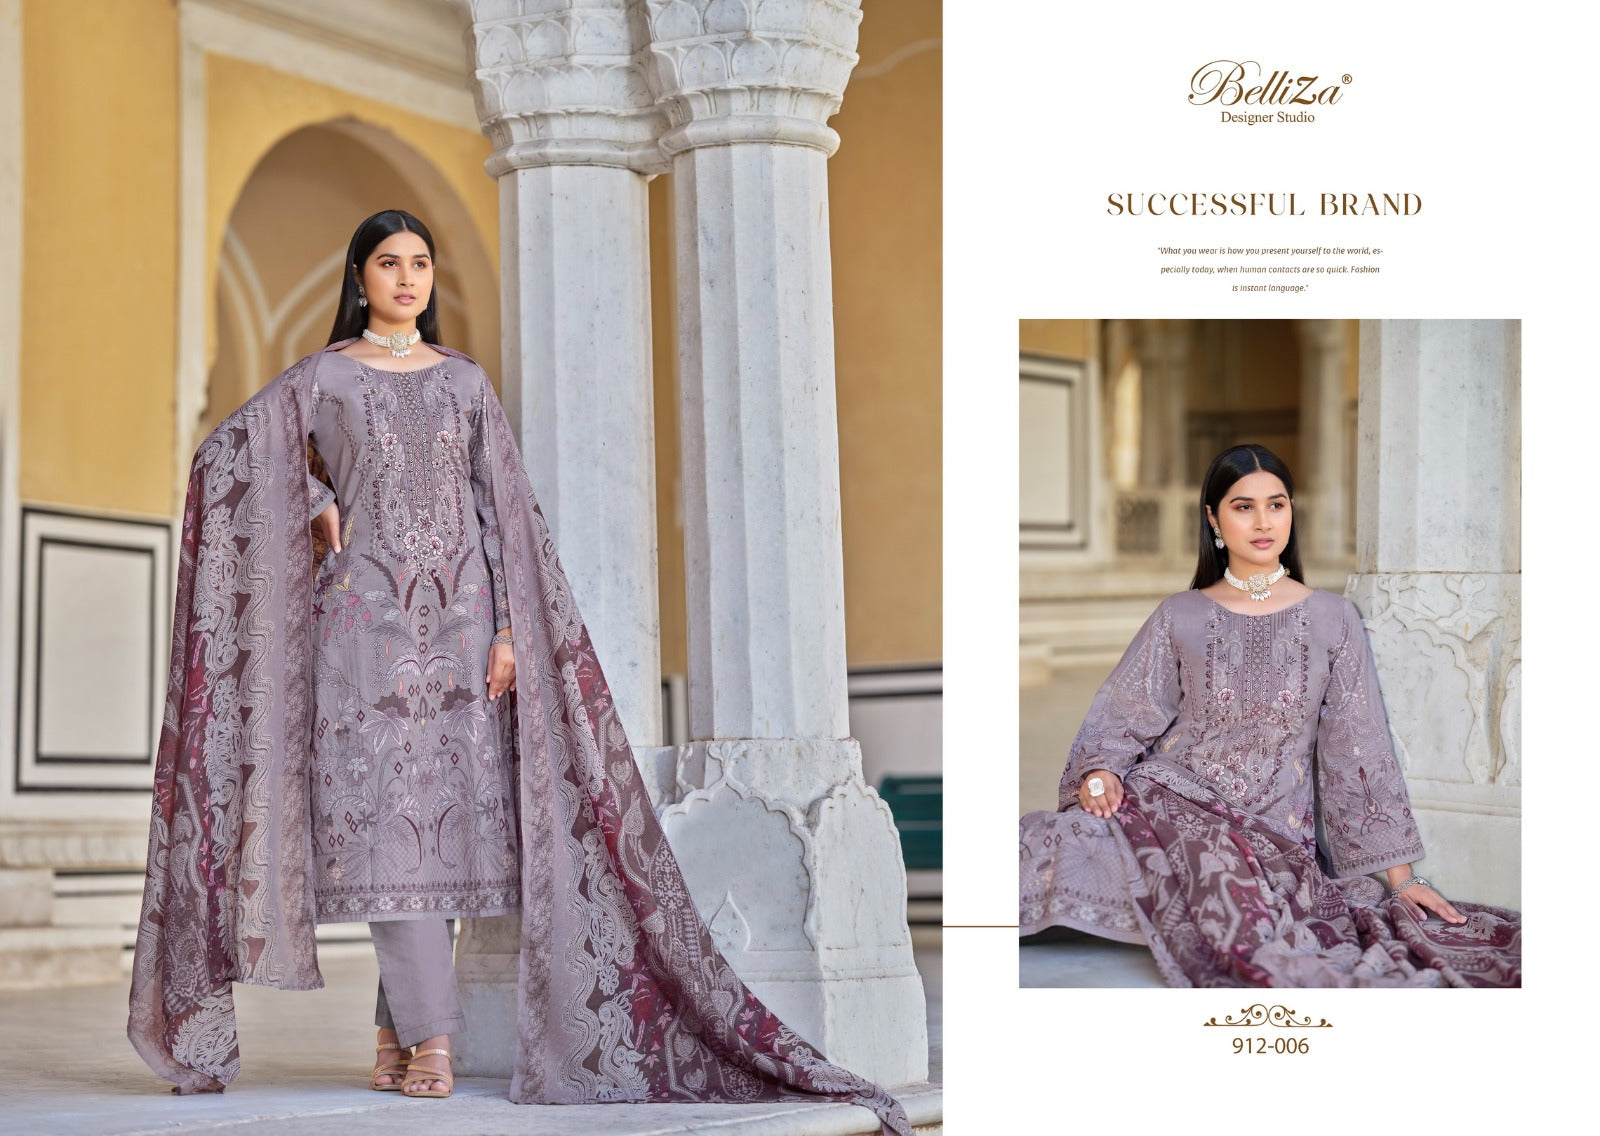 Naira Vol 49 Belliza Designer Studio Pure Cotton Karachi Salwar Suits Exporter Gujarat